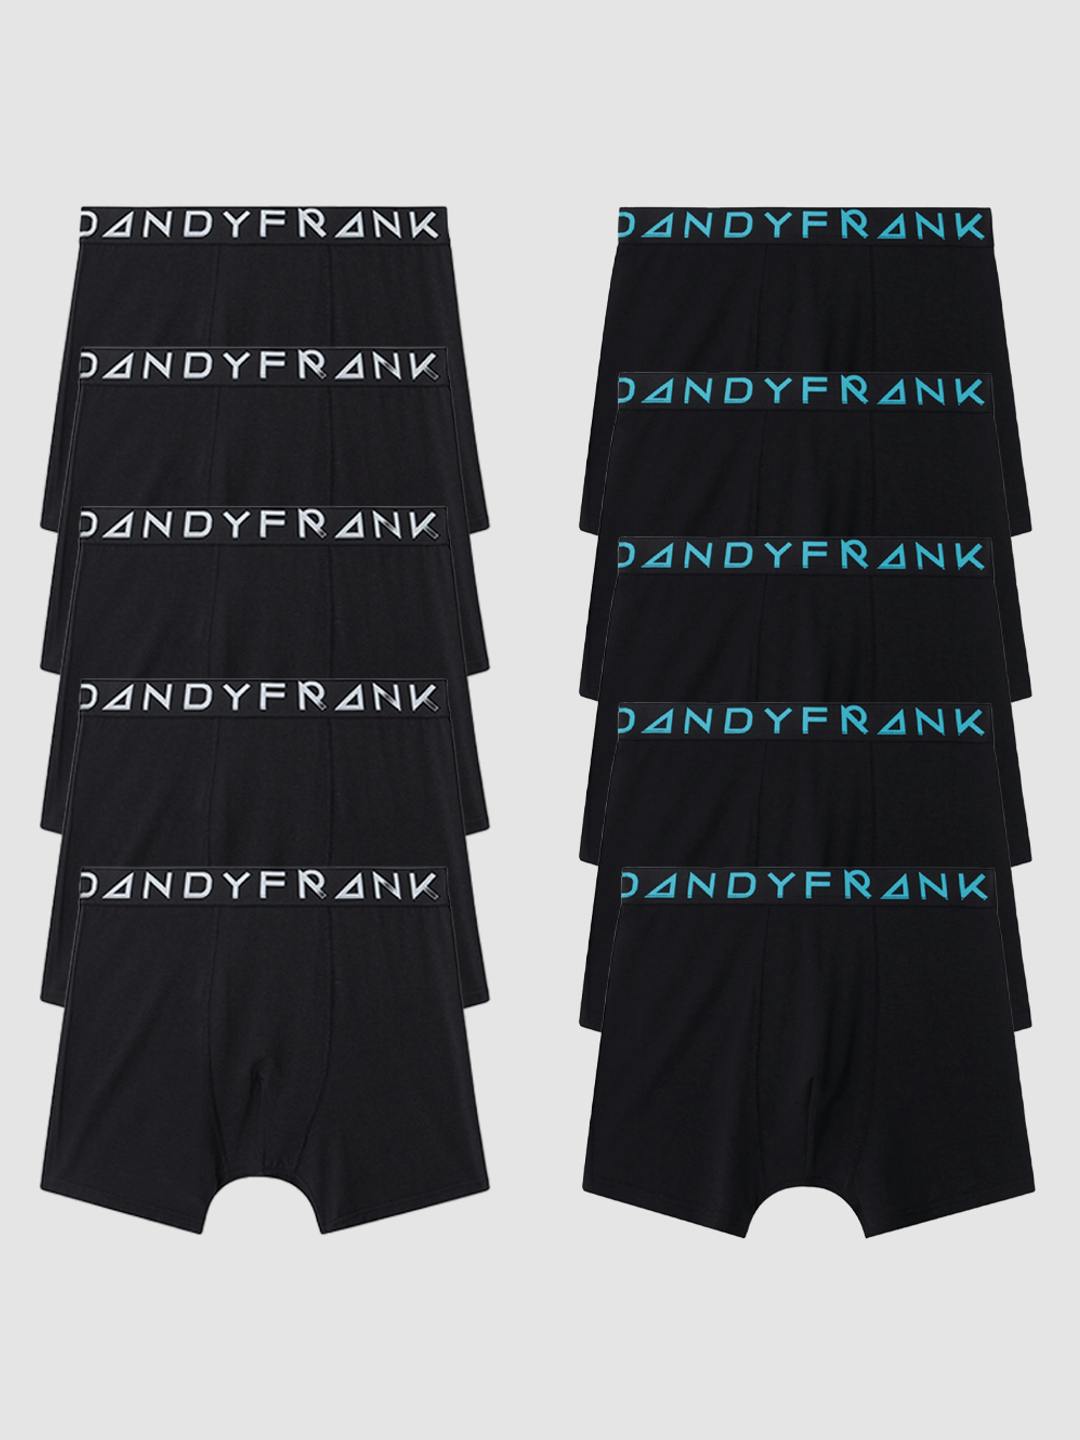 Frank Dandy Printed Boxer Black/Silver-2 - Kalsonger online